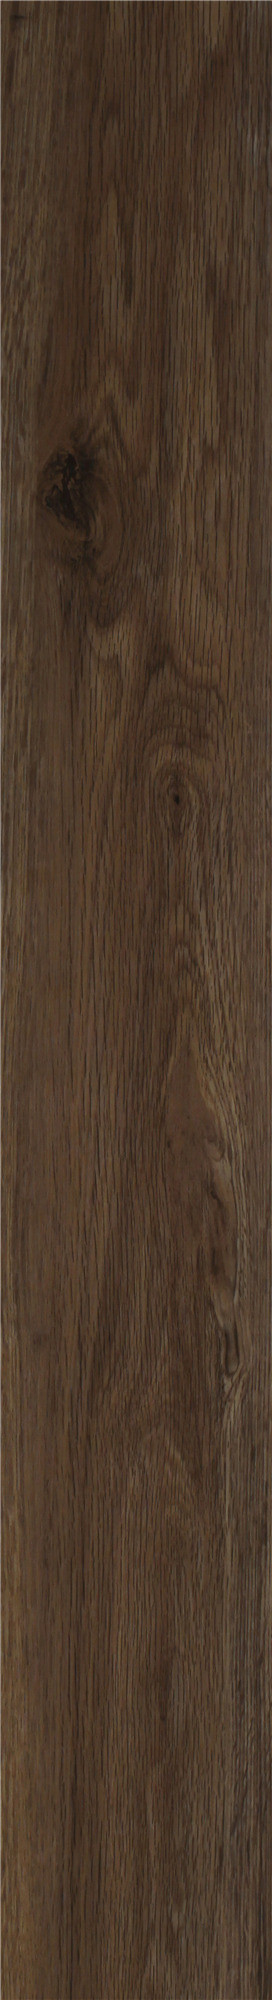 Glue Down LVT Flooring Luxury Vinyl Plank Flooring Manufacturers | Wood Look Pet Friendly Kid Friendly VOC Free Durable HIF 20483